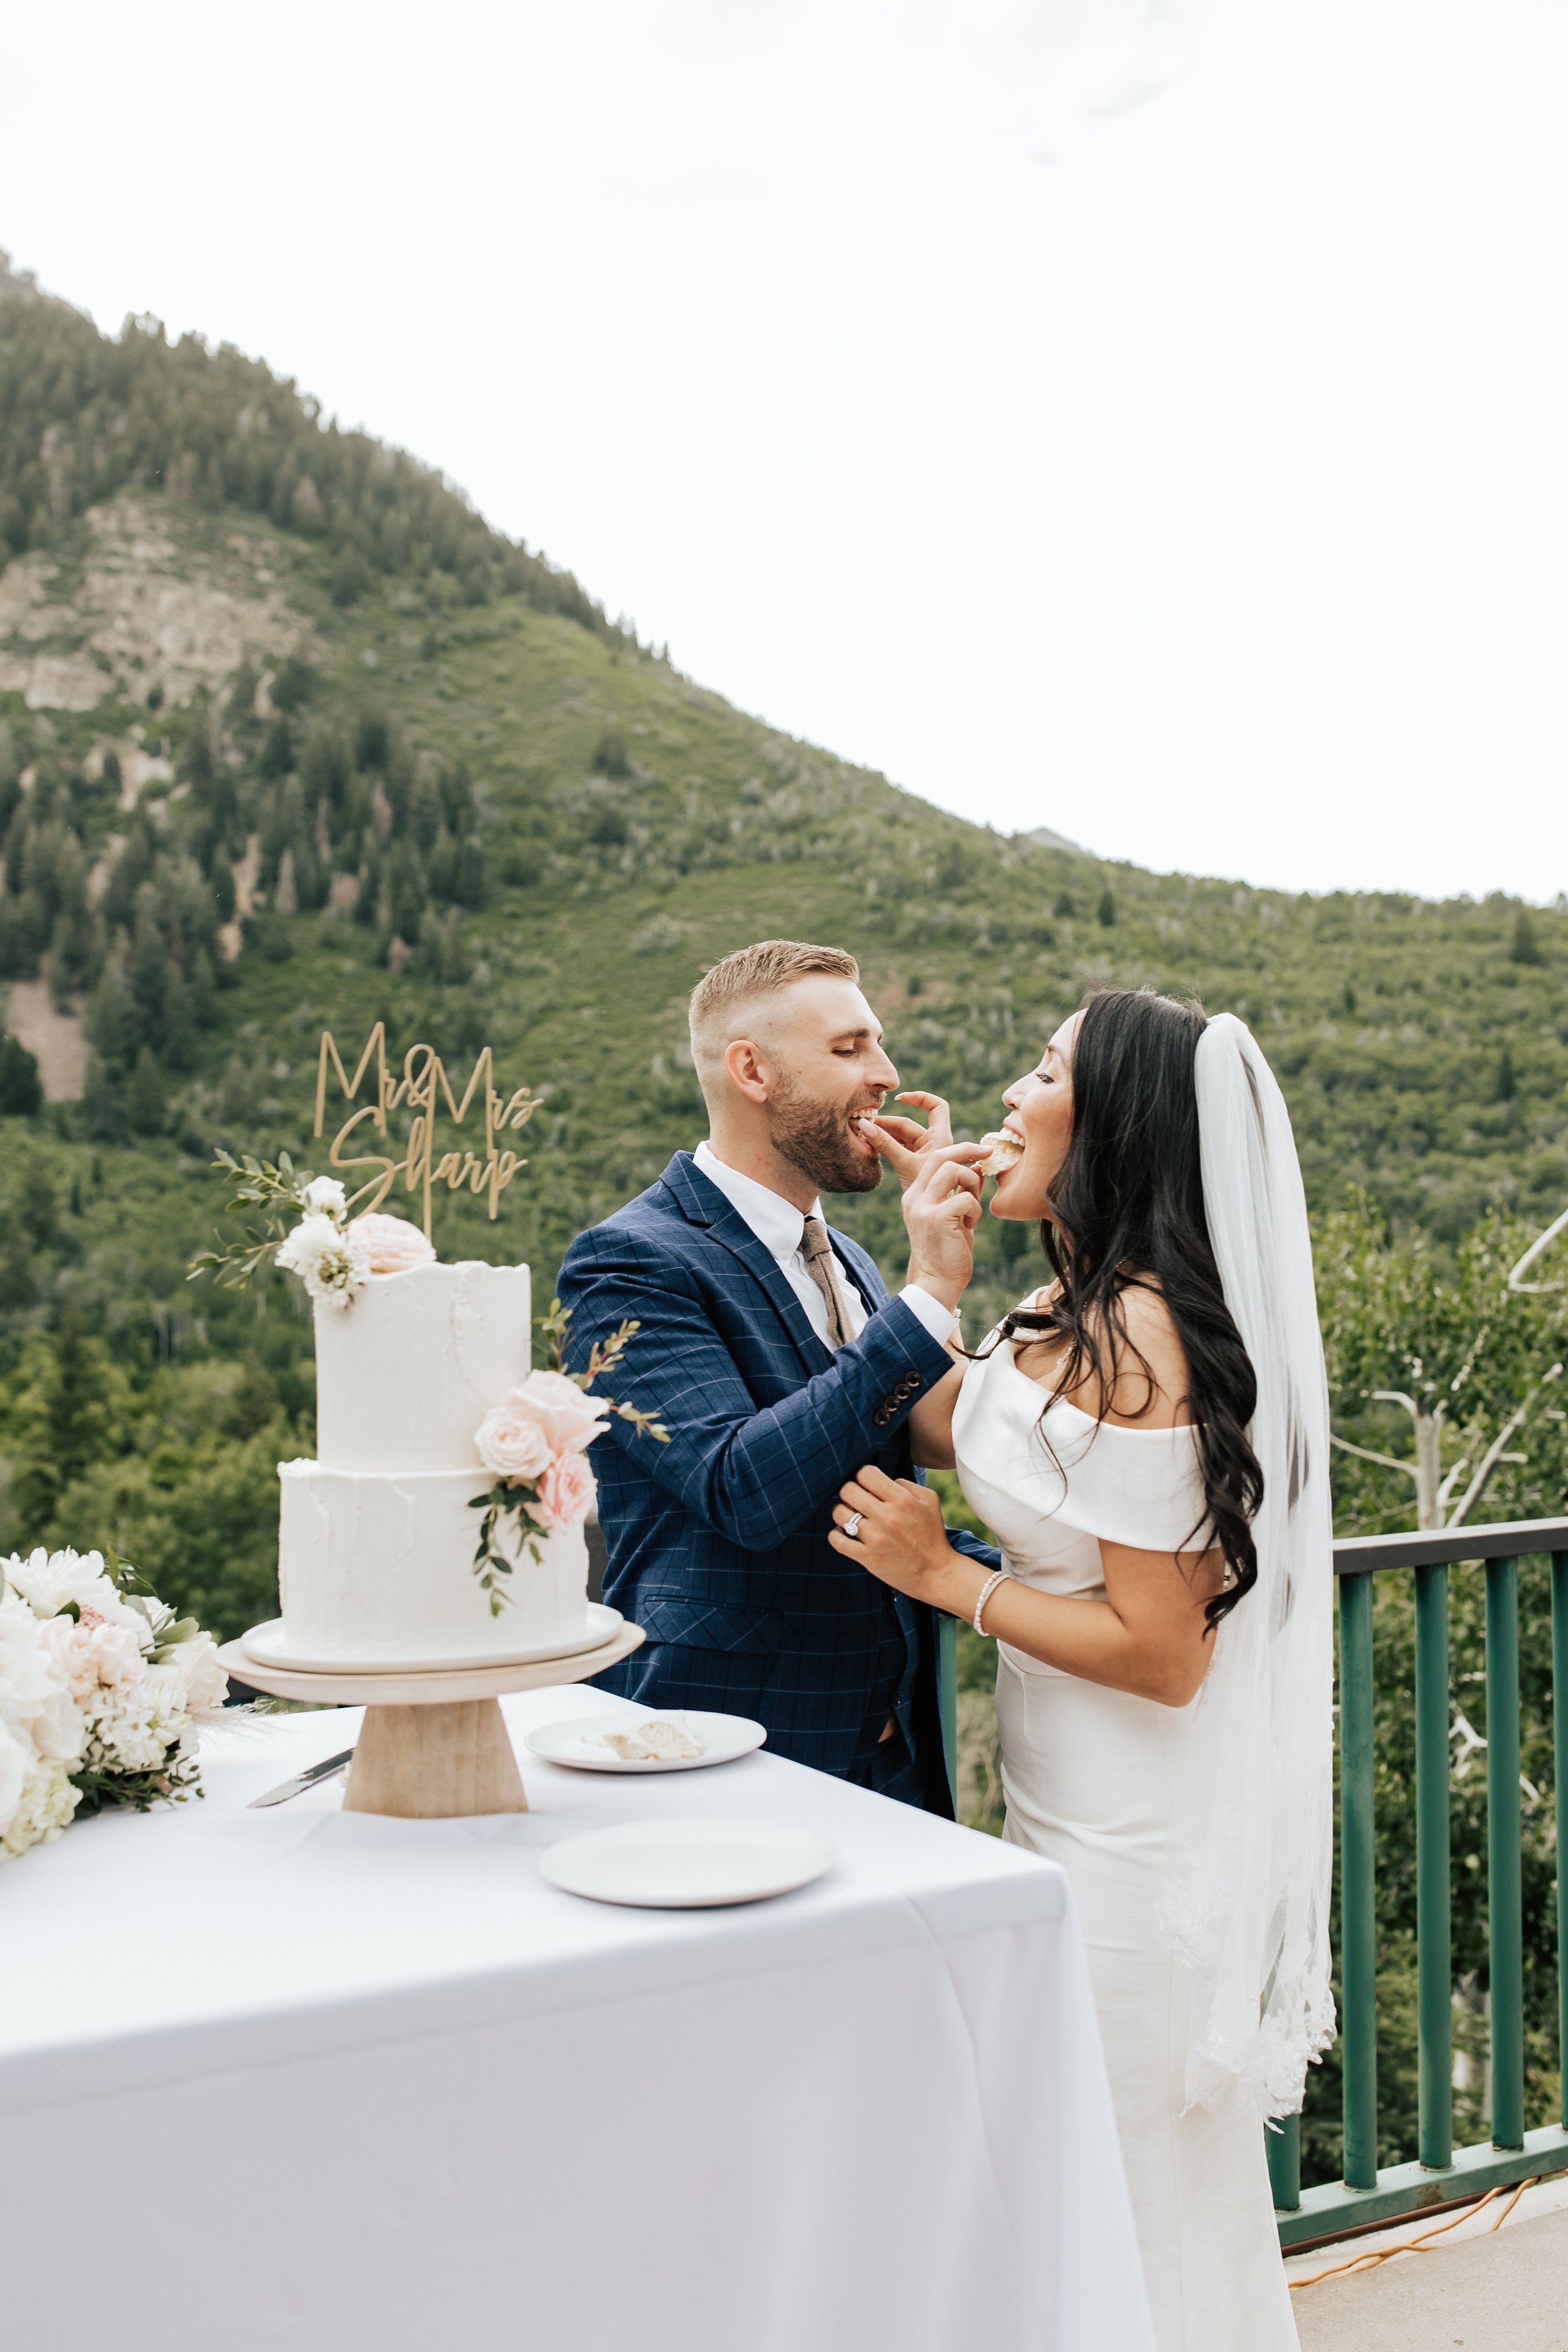  Couple cuts wedding cake together. Beautiful two tier wedding cake with flowers. #weddingcake #weddingphotos #utahwedding 